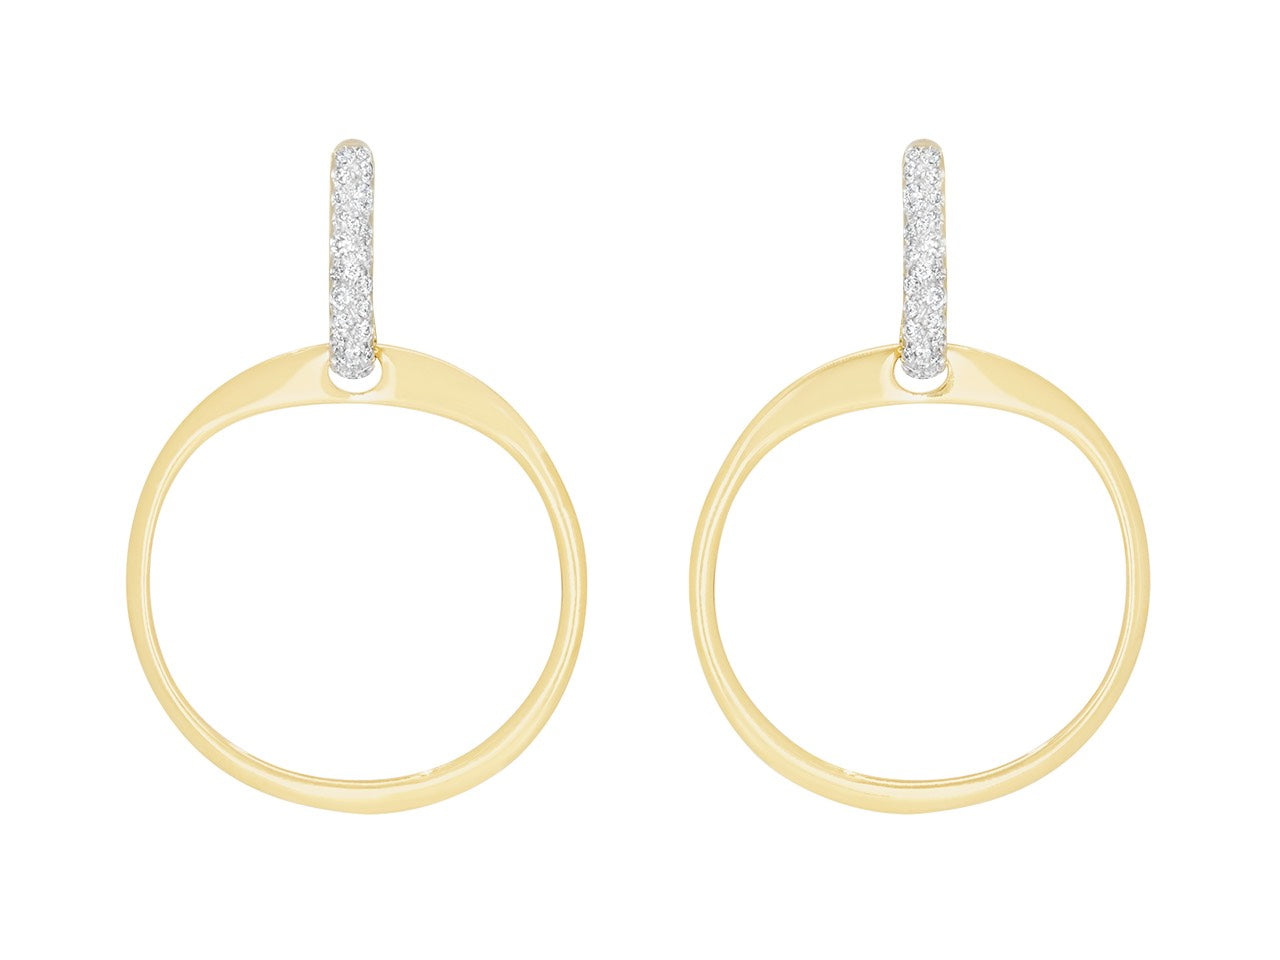 Hoop Earrings with Diamond Tops in 18K Gold, by Beladora